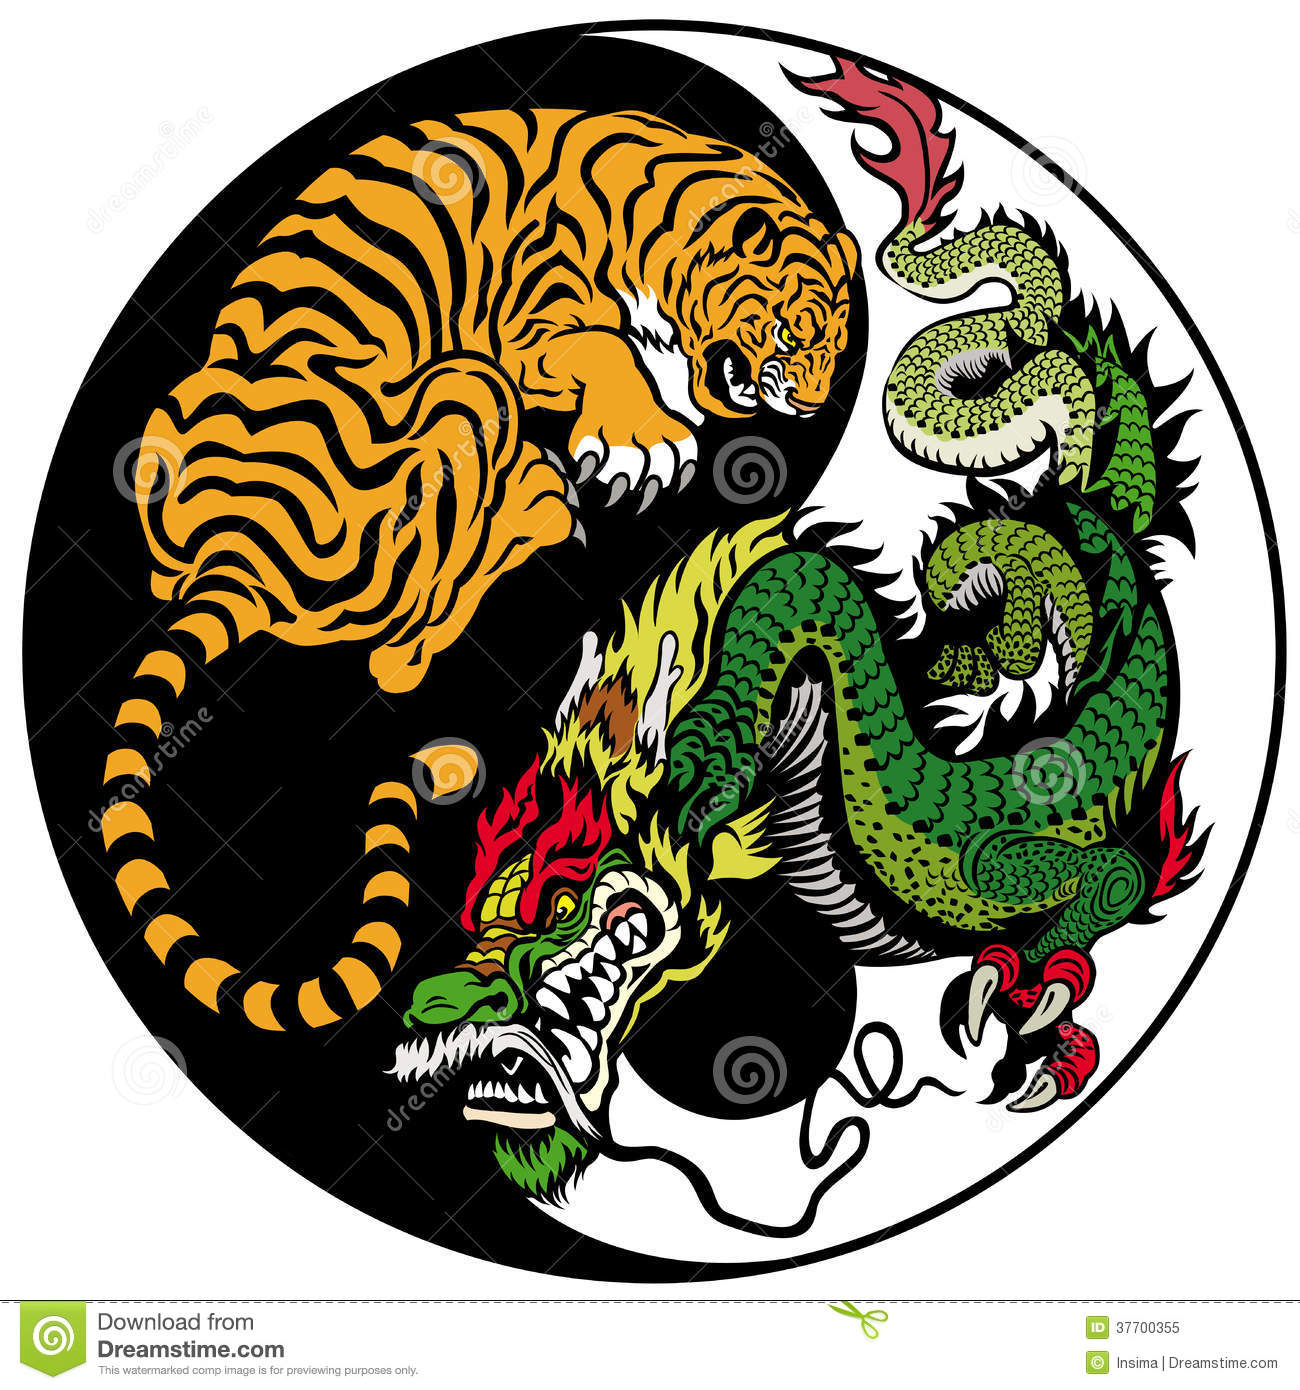 Dragon And Tiger Yin Yang Symbol Of Harmony And Balance Illustration